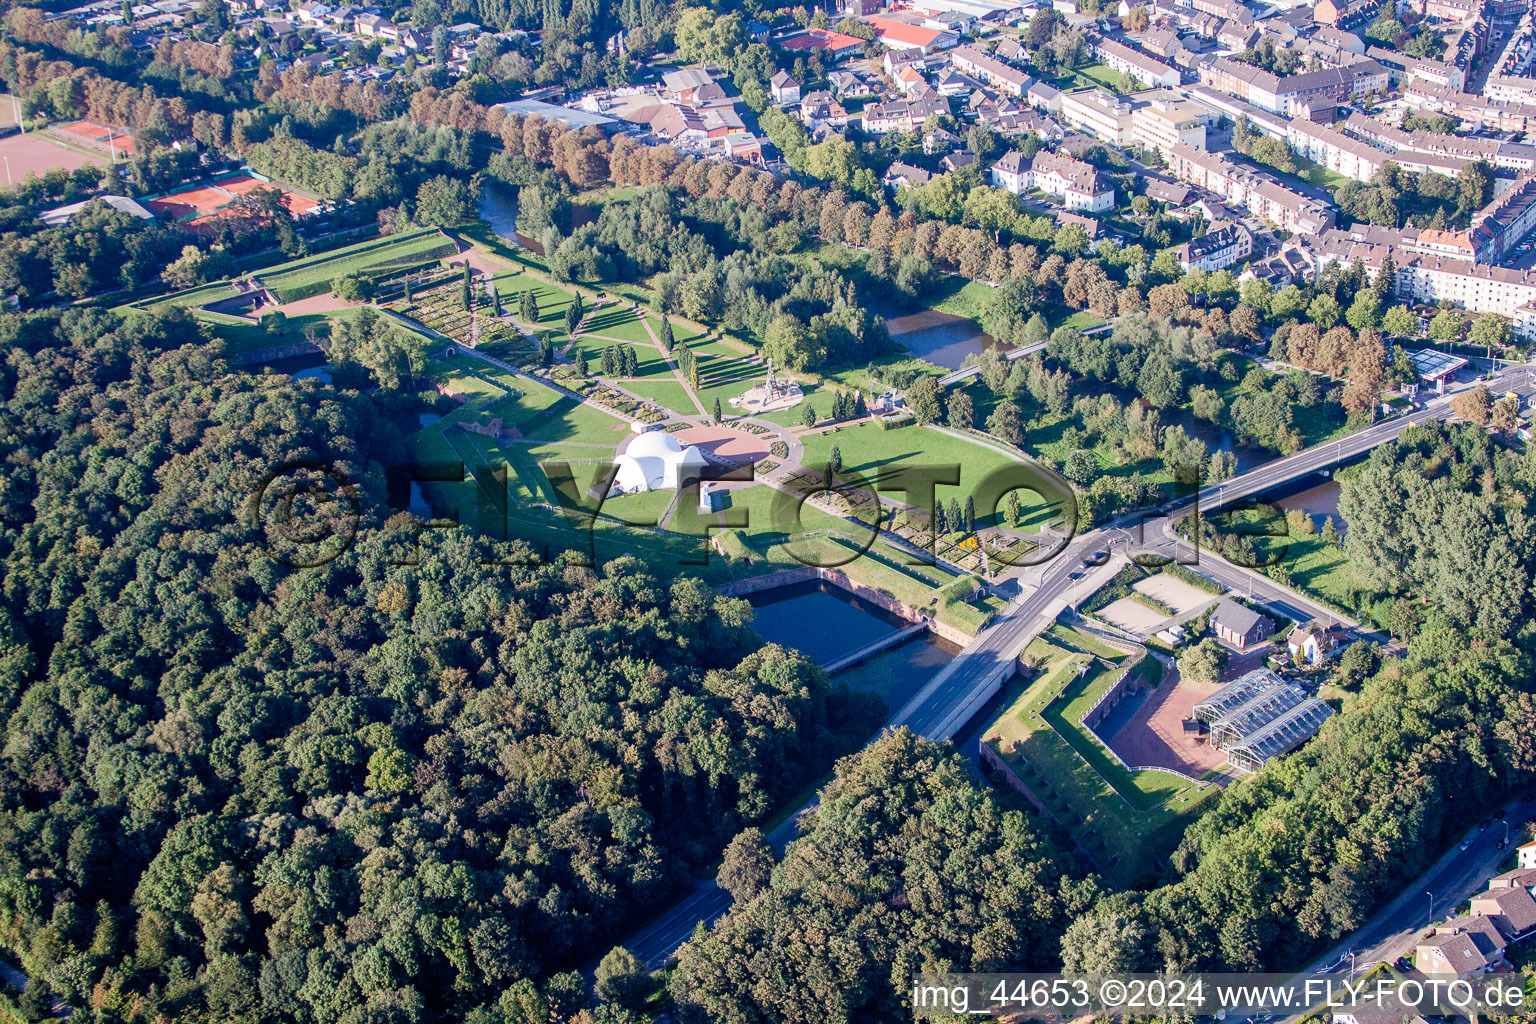 Aerial view of Park of Pulvermagazin Juelich / Brueckenkopfpark in Juelich in the state North Rhine-Westphalia, Germany